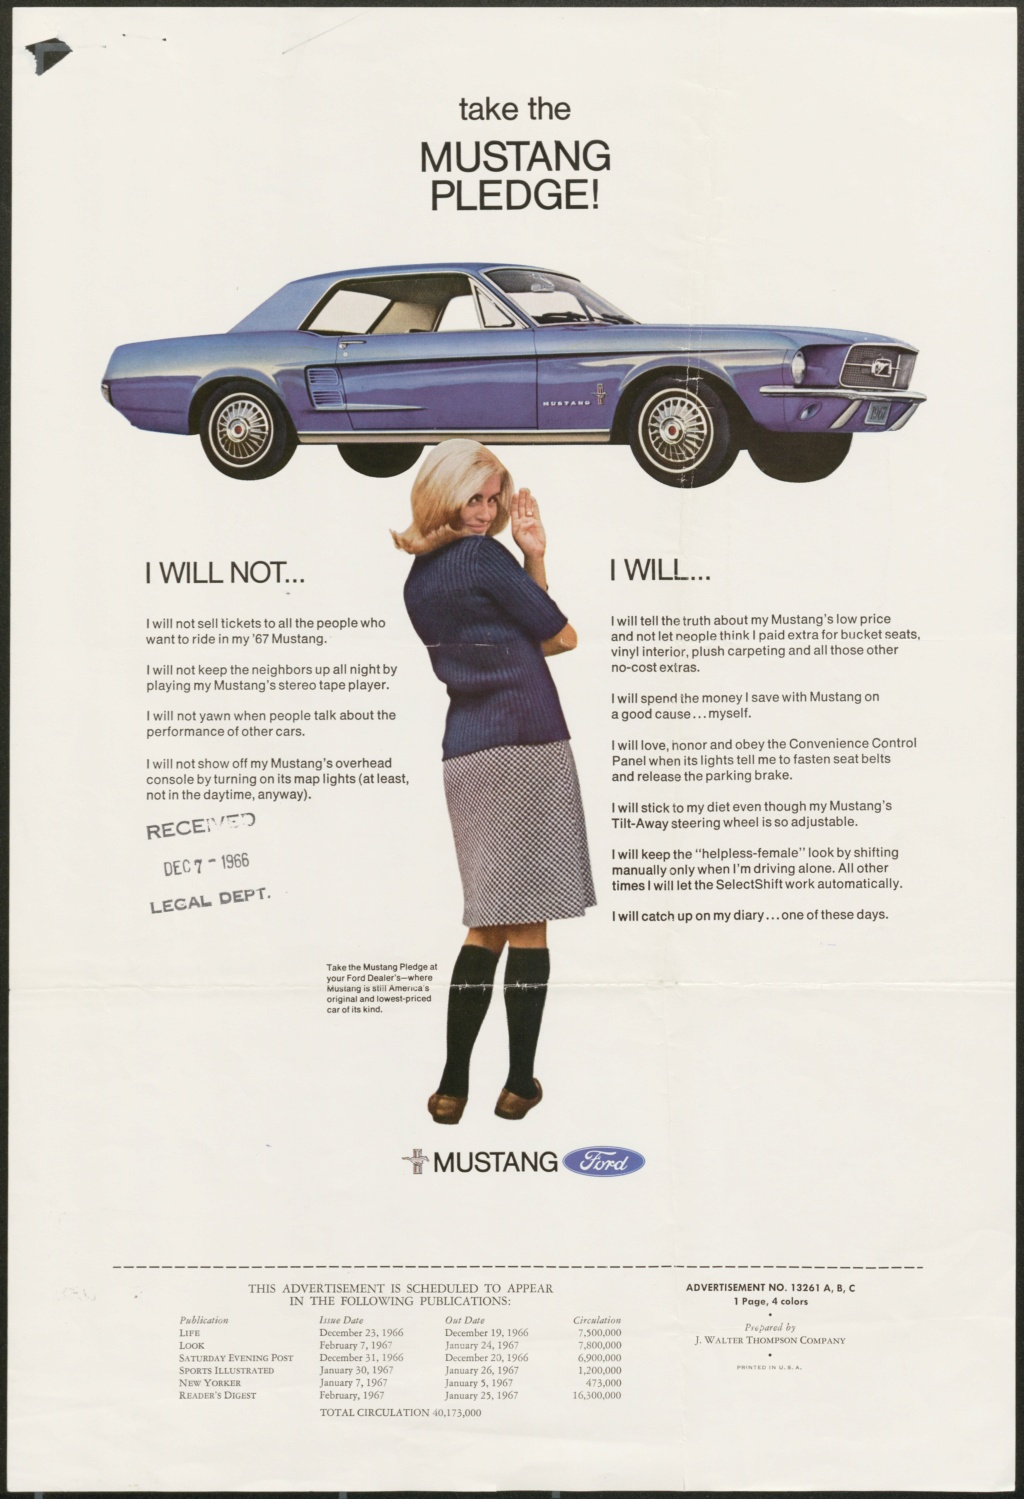 Publicité Mustang 1967 , collection J. Walter Thompson pour la Ford Motor Company.  Jwtad319